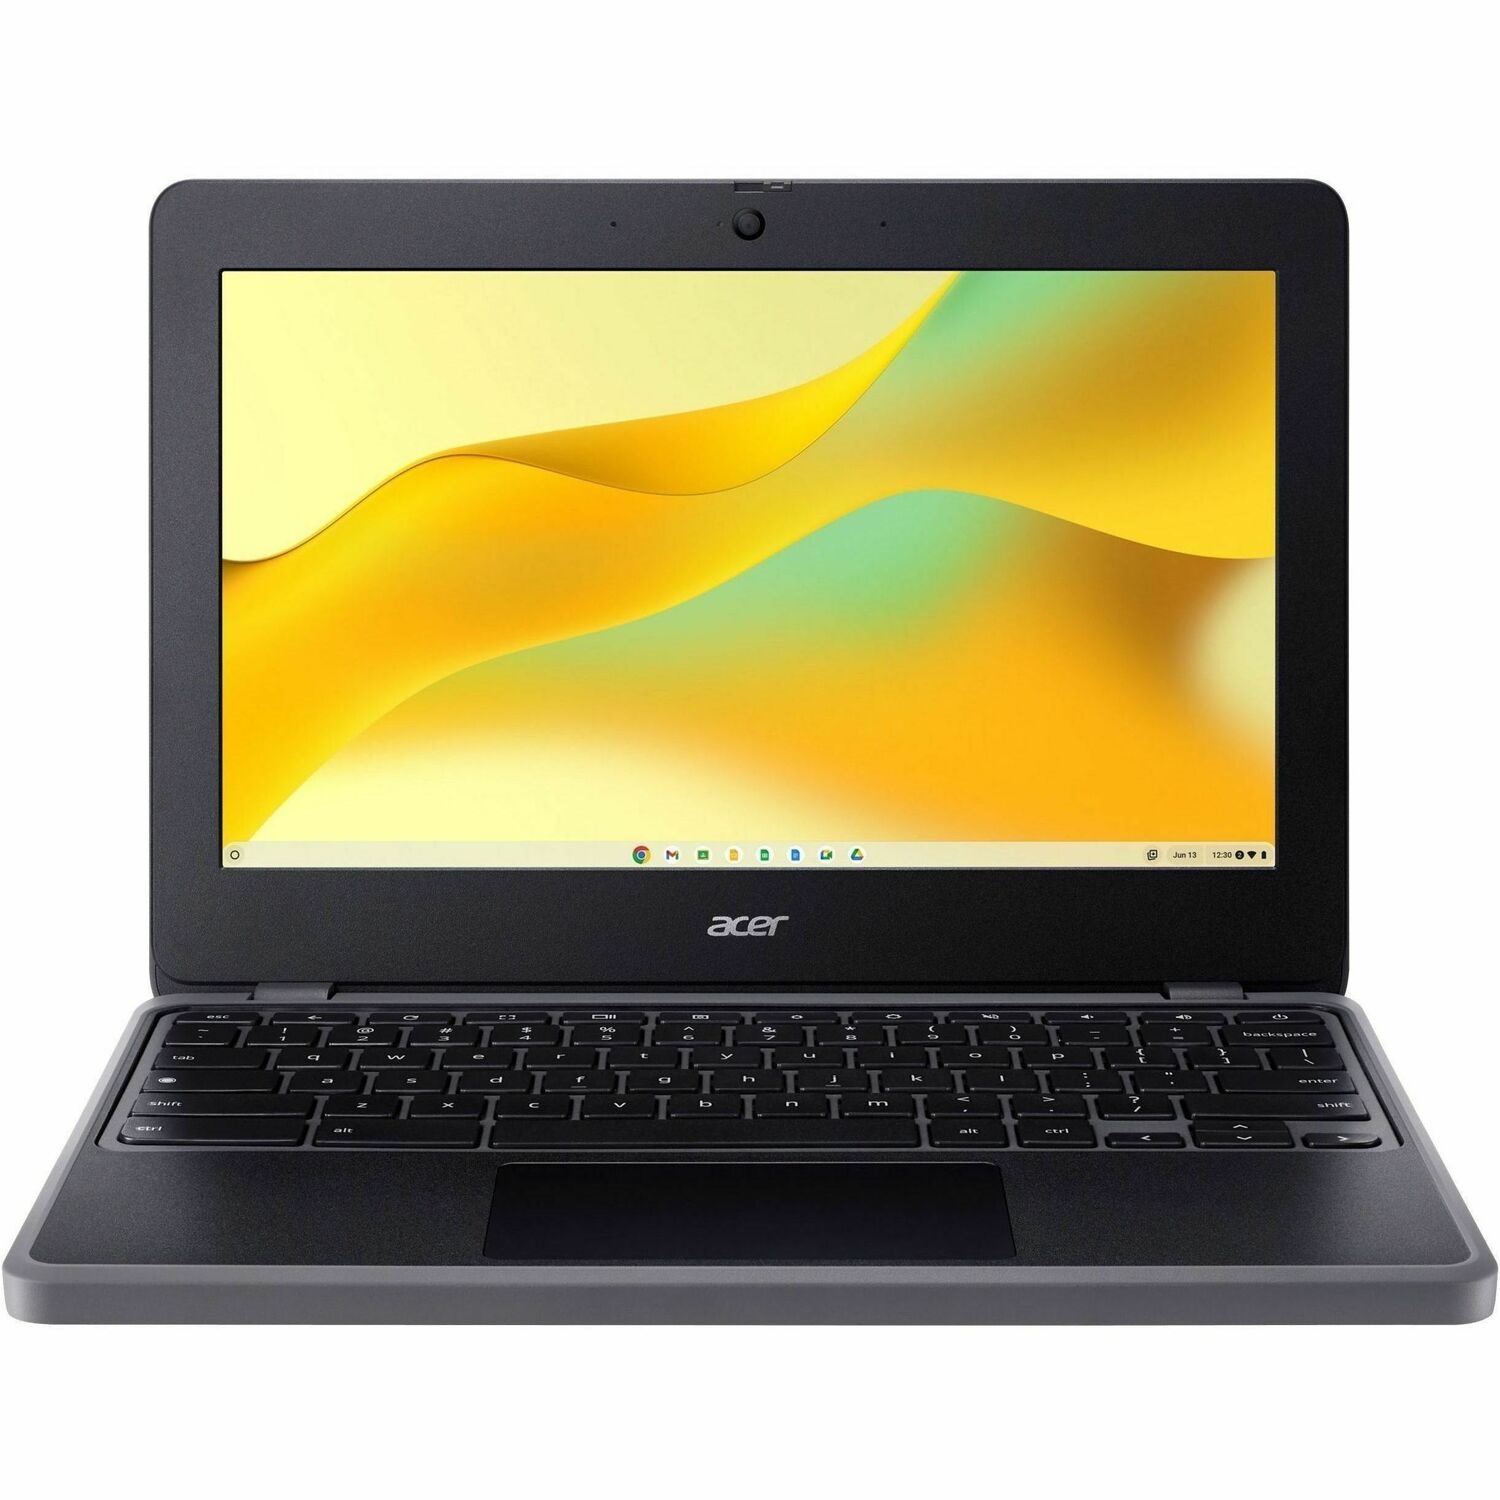 Acer Chromebook 511 C736T C736T-C8EN 11.6" Touchscreen Chromebook - HD - Intel N100 - 8 GB - 64 GB Flash Memory - English (US) Keyboard - Black